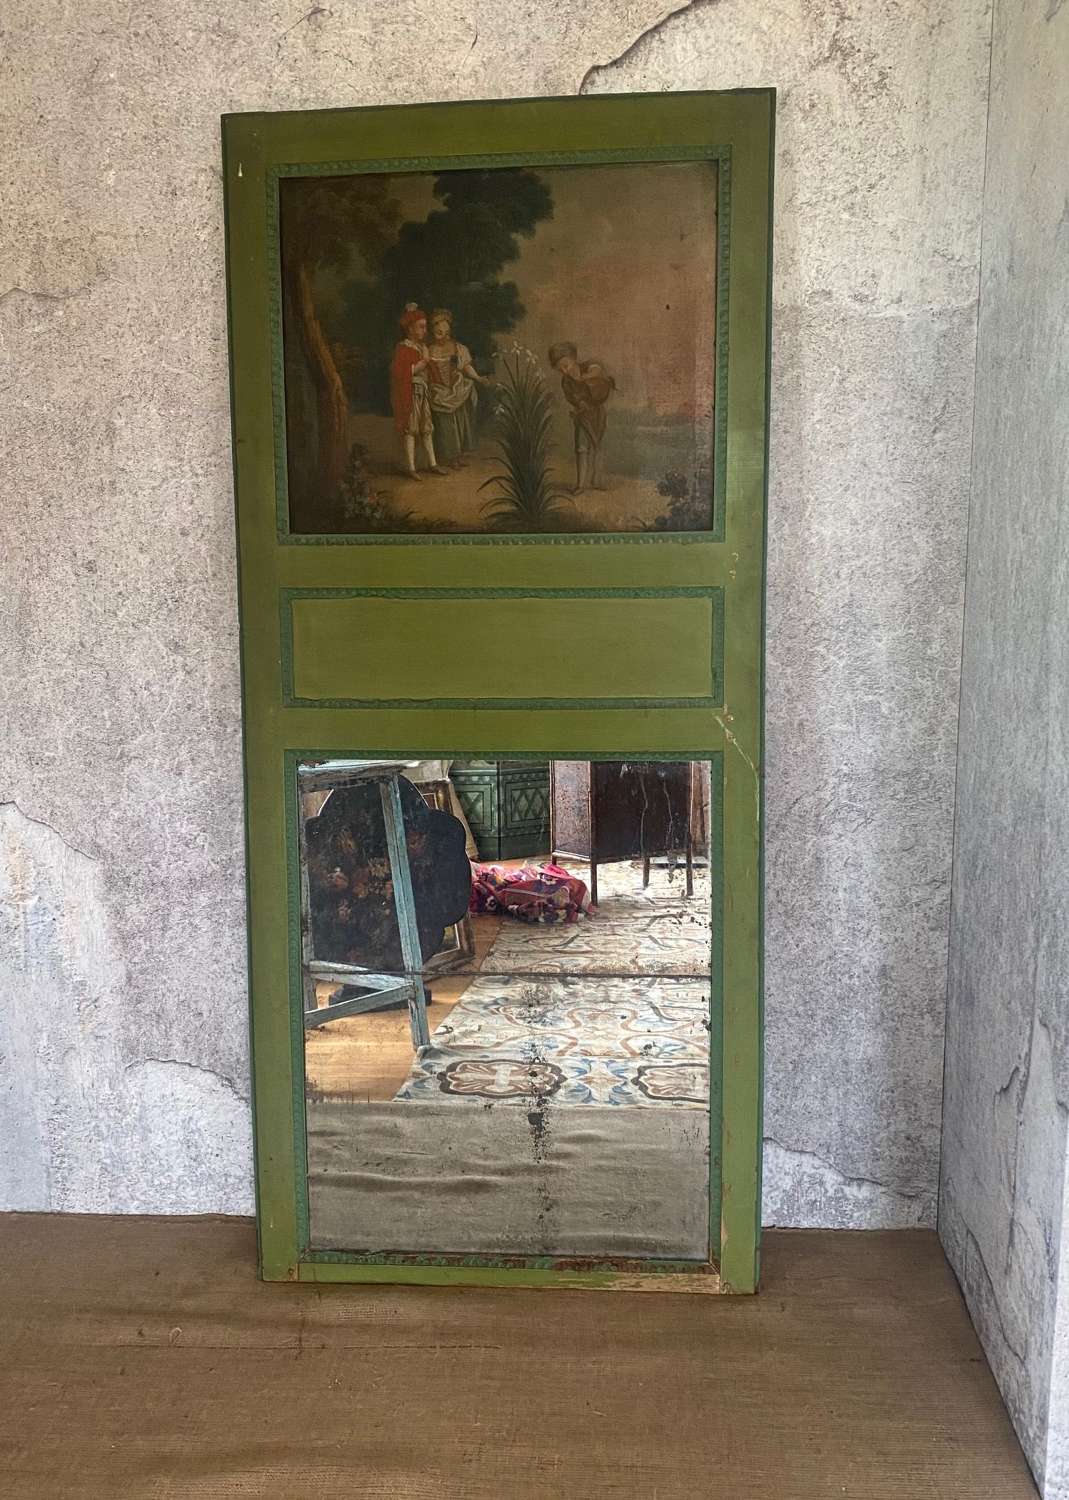 19th century French trumeau mirror